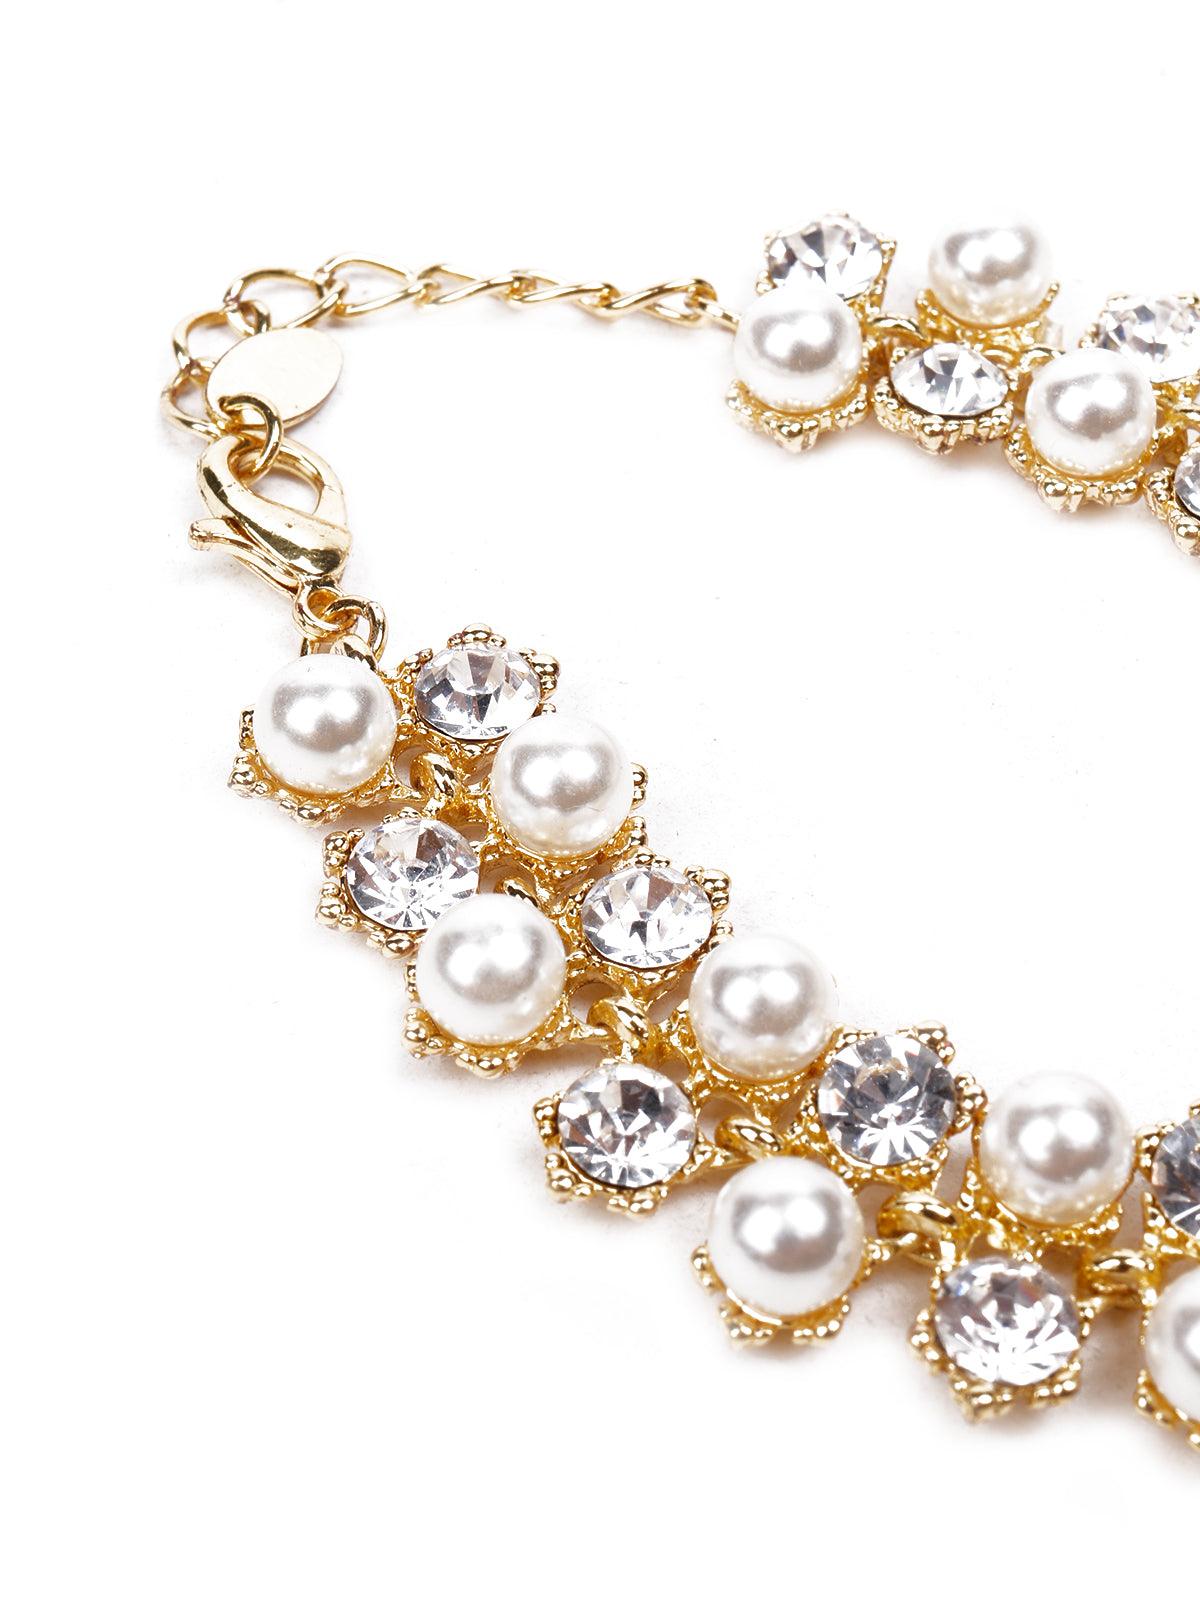 Women's Gold Bracelet Embellished With Crystals And Pearls - Odette